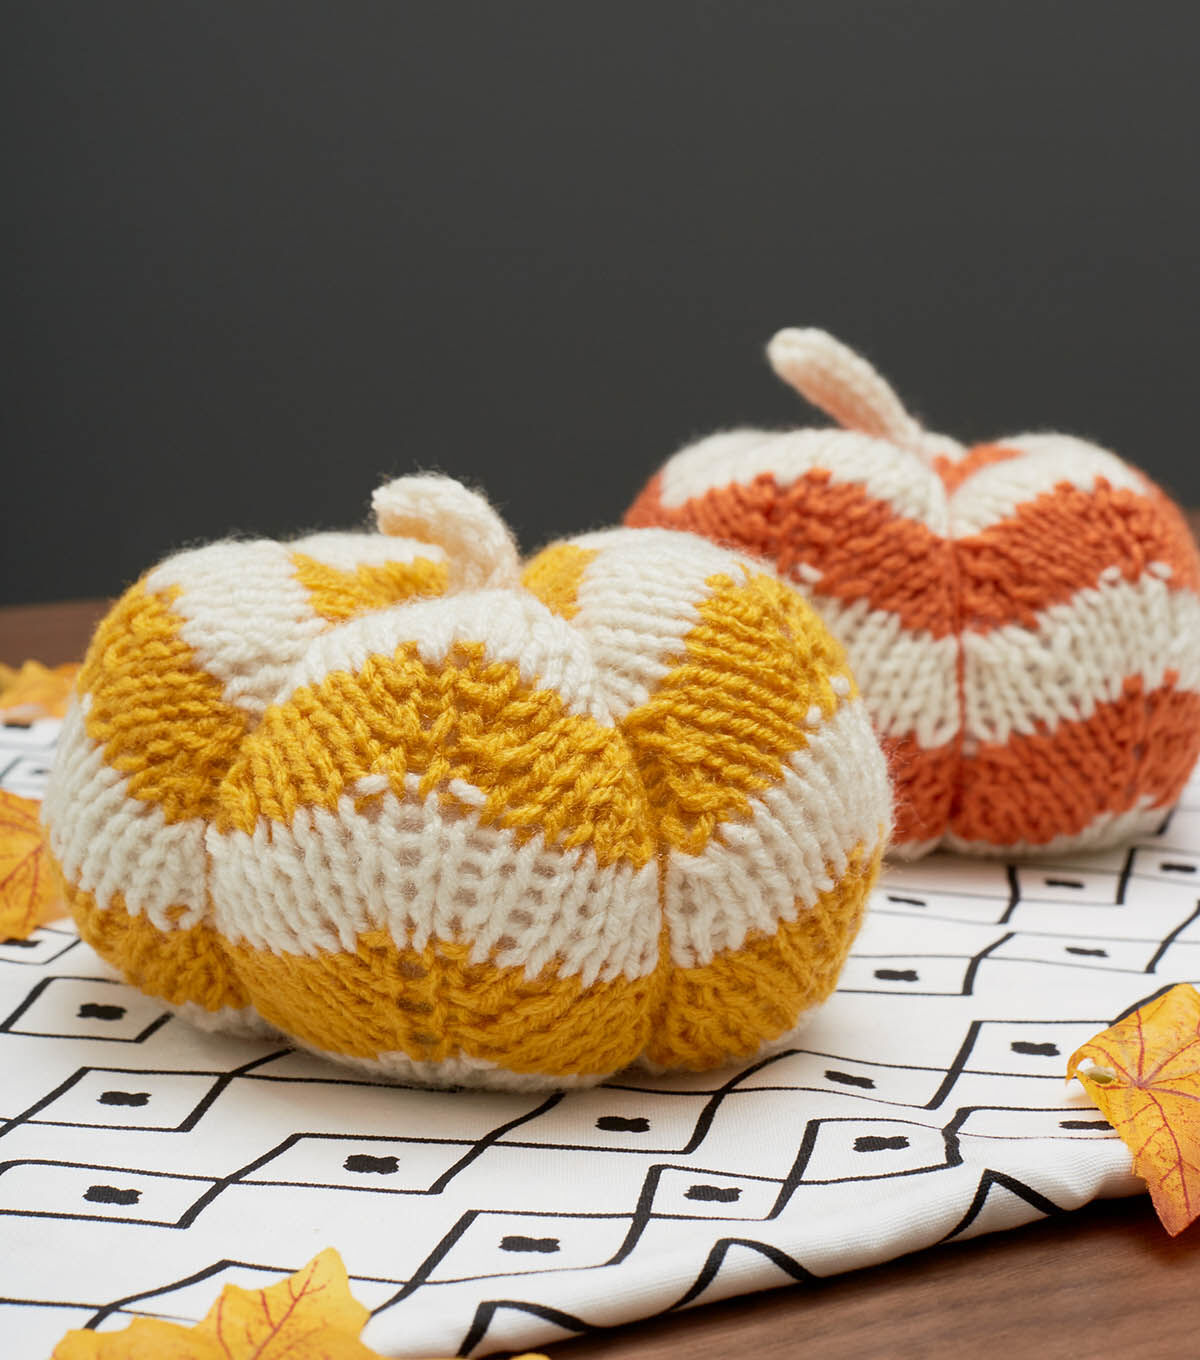 How To Make Spicy Knit Pumpkins Online | JOANN